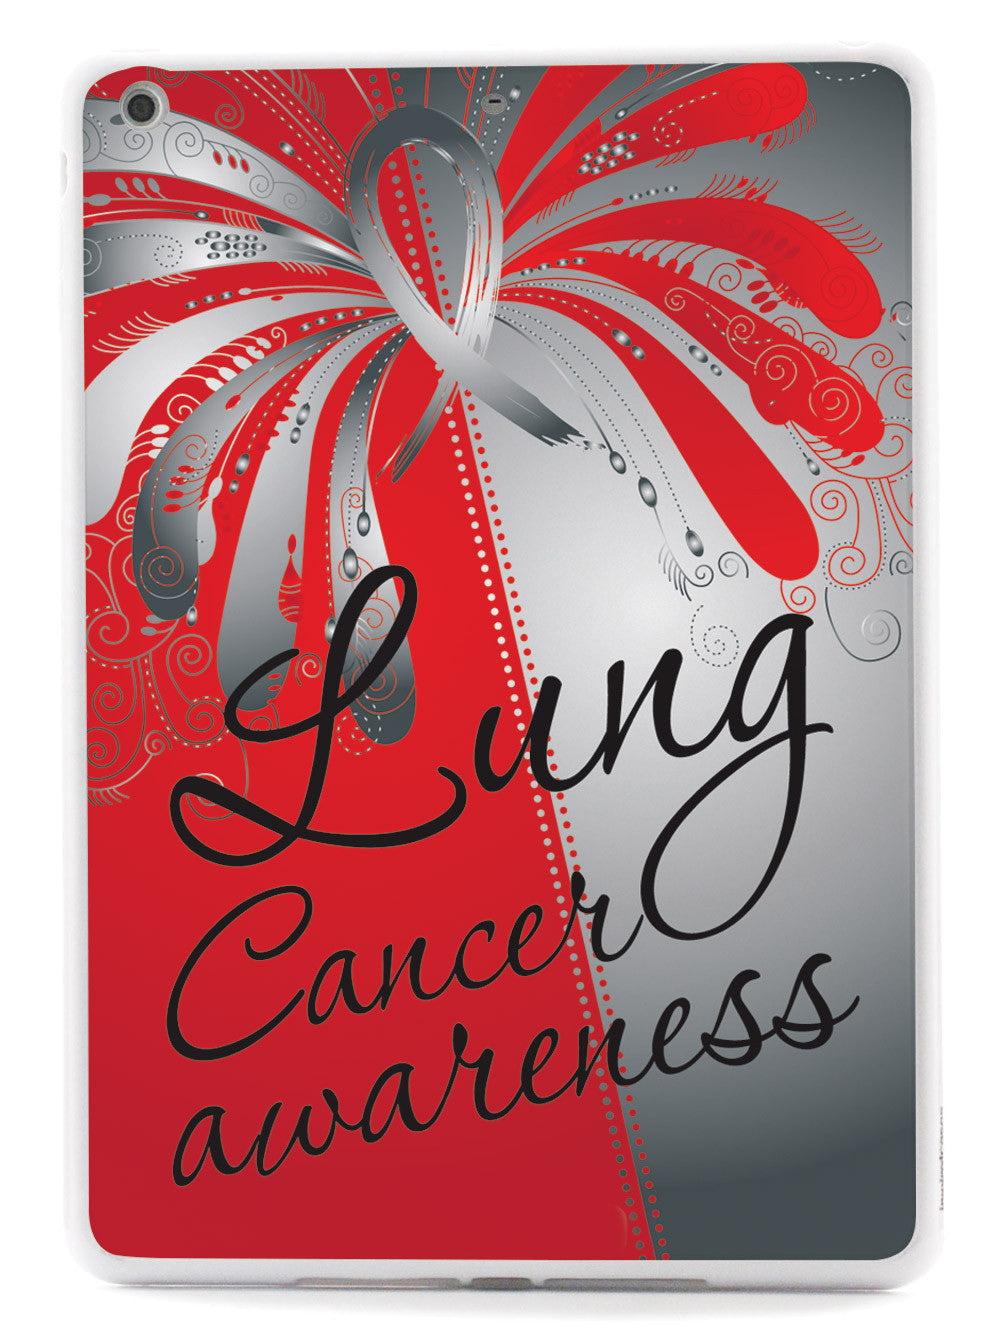 Lung Cancer Awareness Case